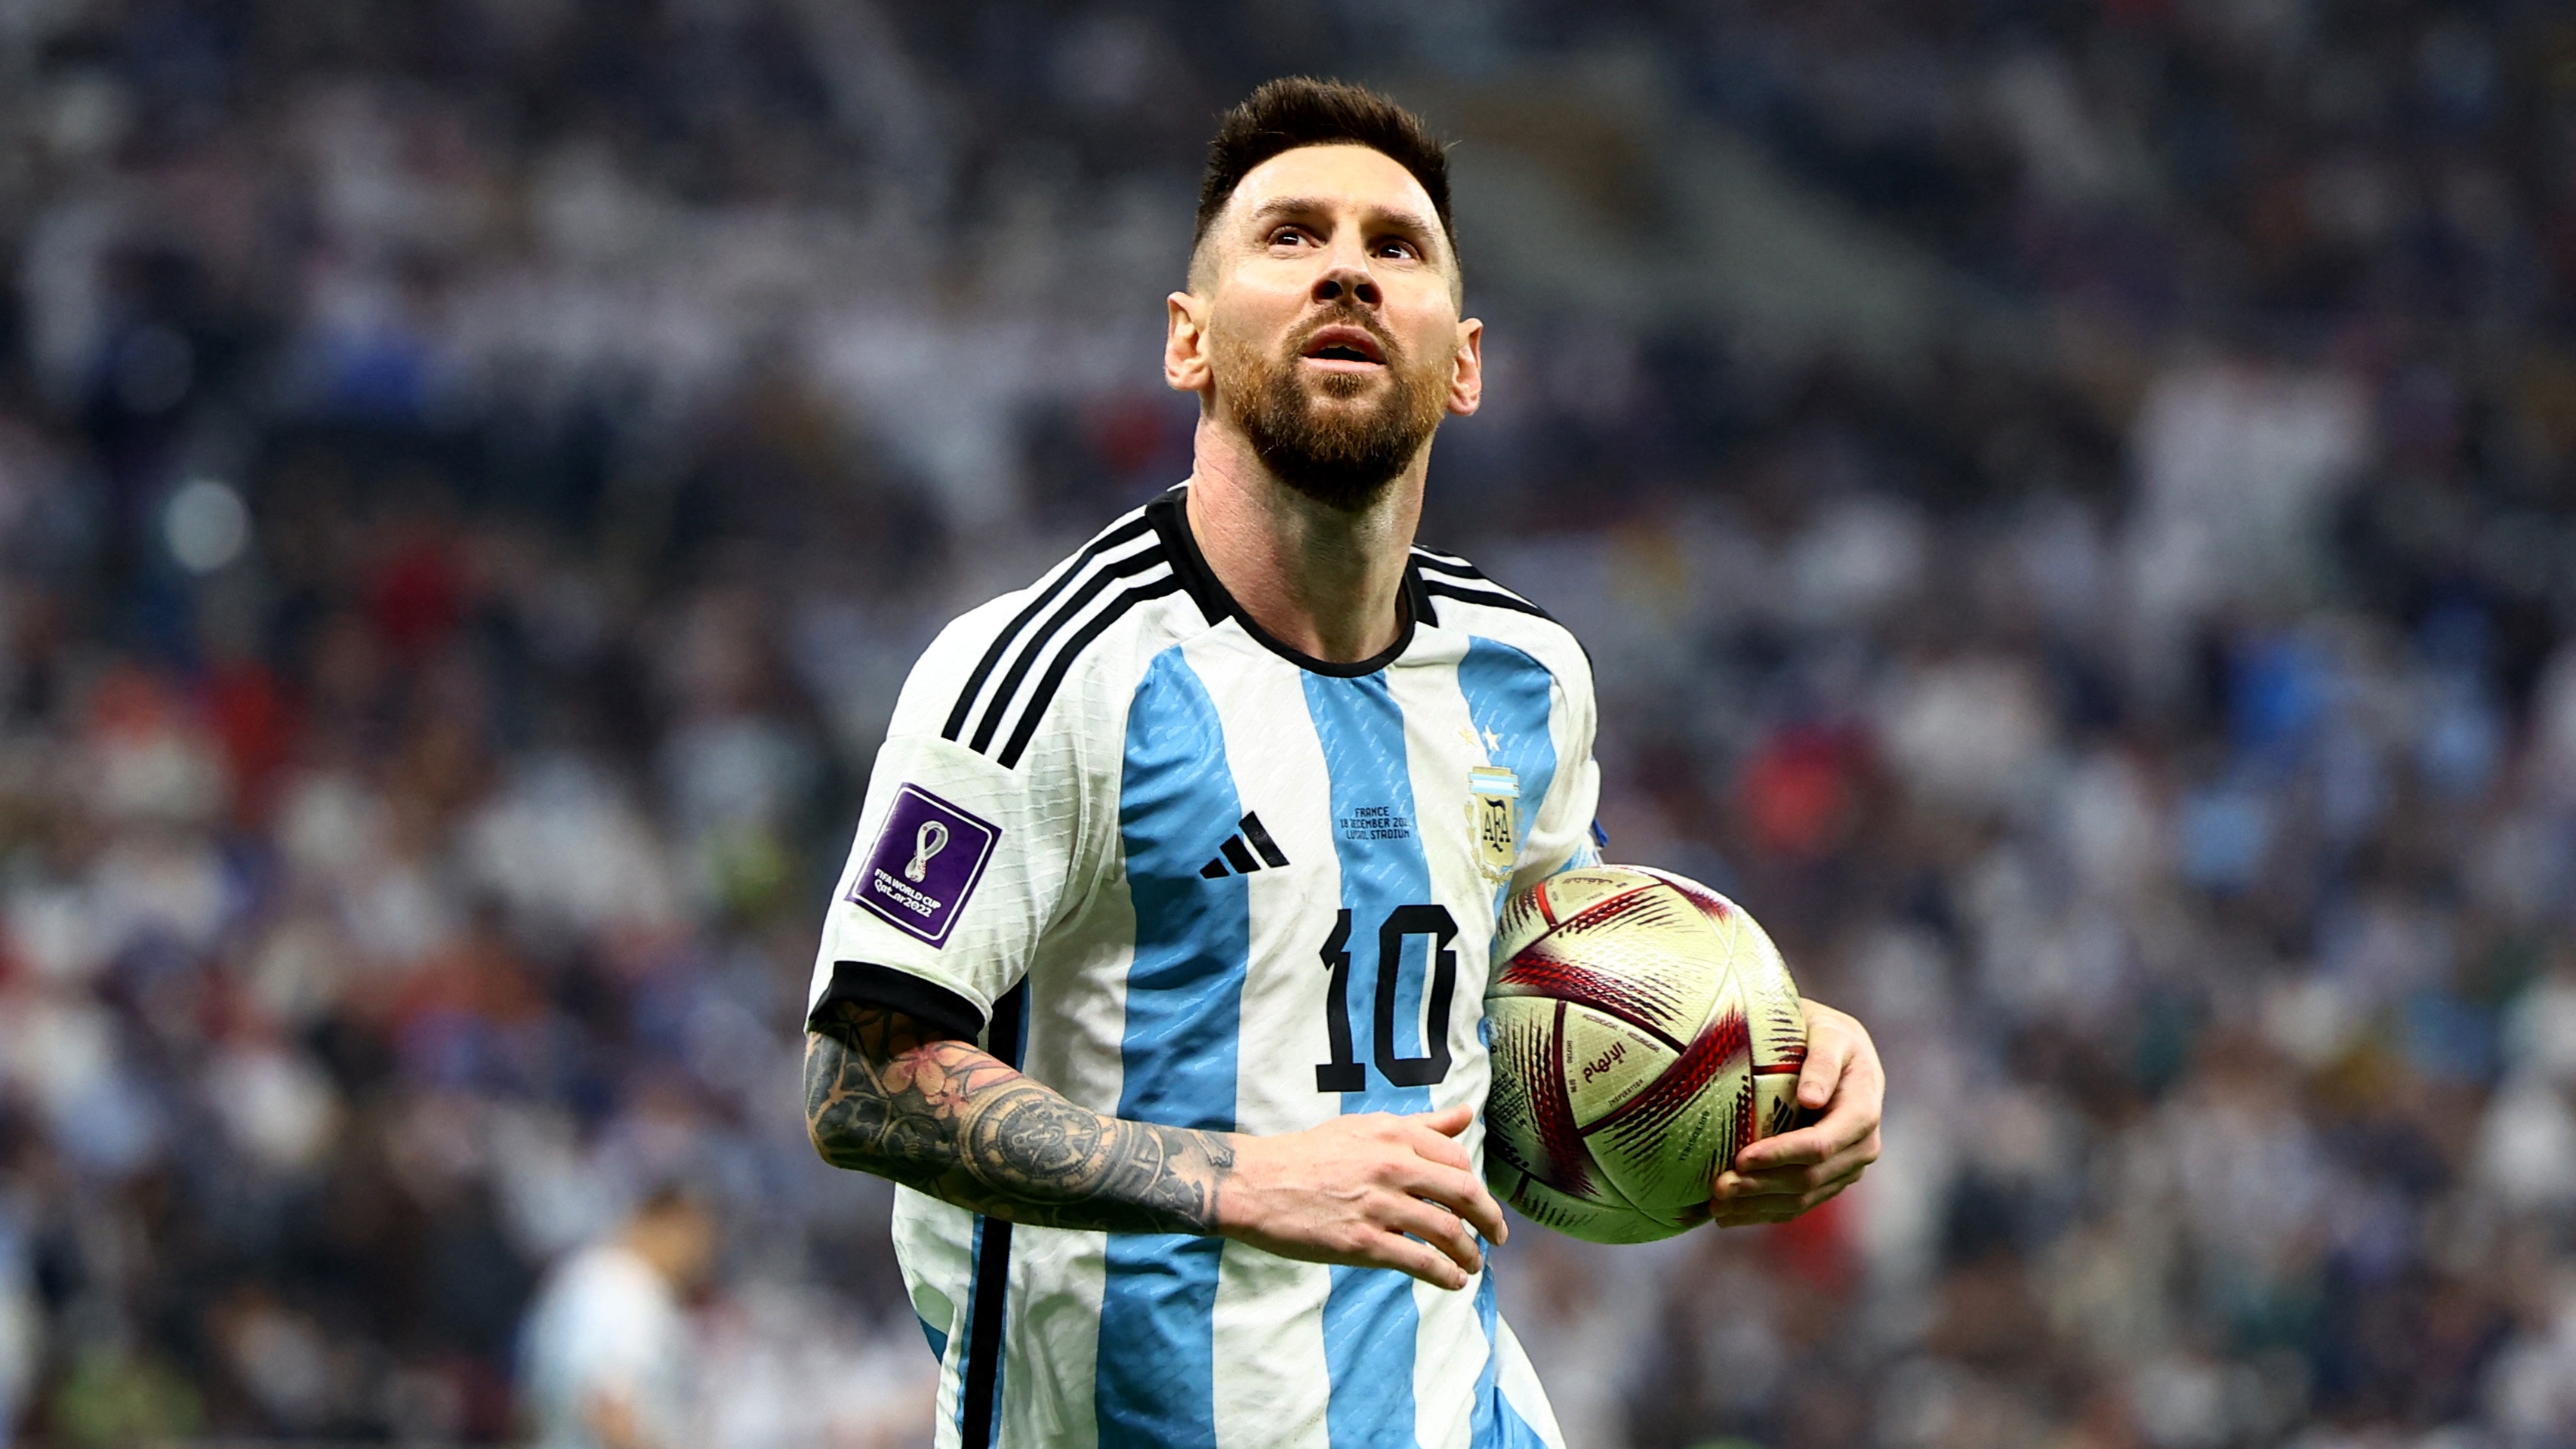 Soccer Football - FIFA World Cup Qatar 2022 - Final - Argentina v France - Lusail Stadium, Lusail, Qatar - December 18, 2022 Argentina's Lionel Messi looks on REUTERS/Kai Pfaffenbach